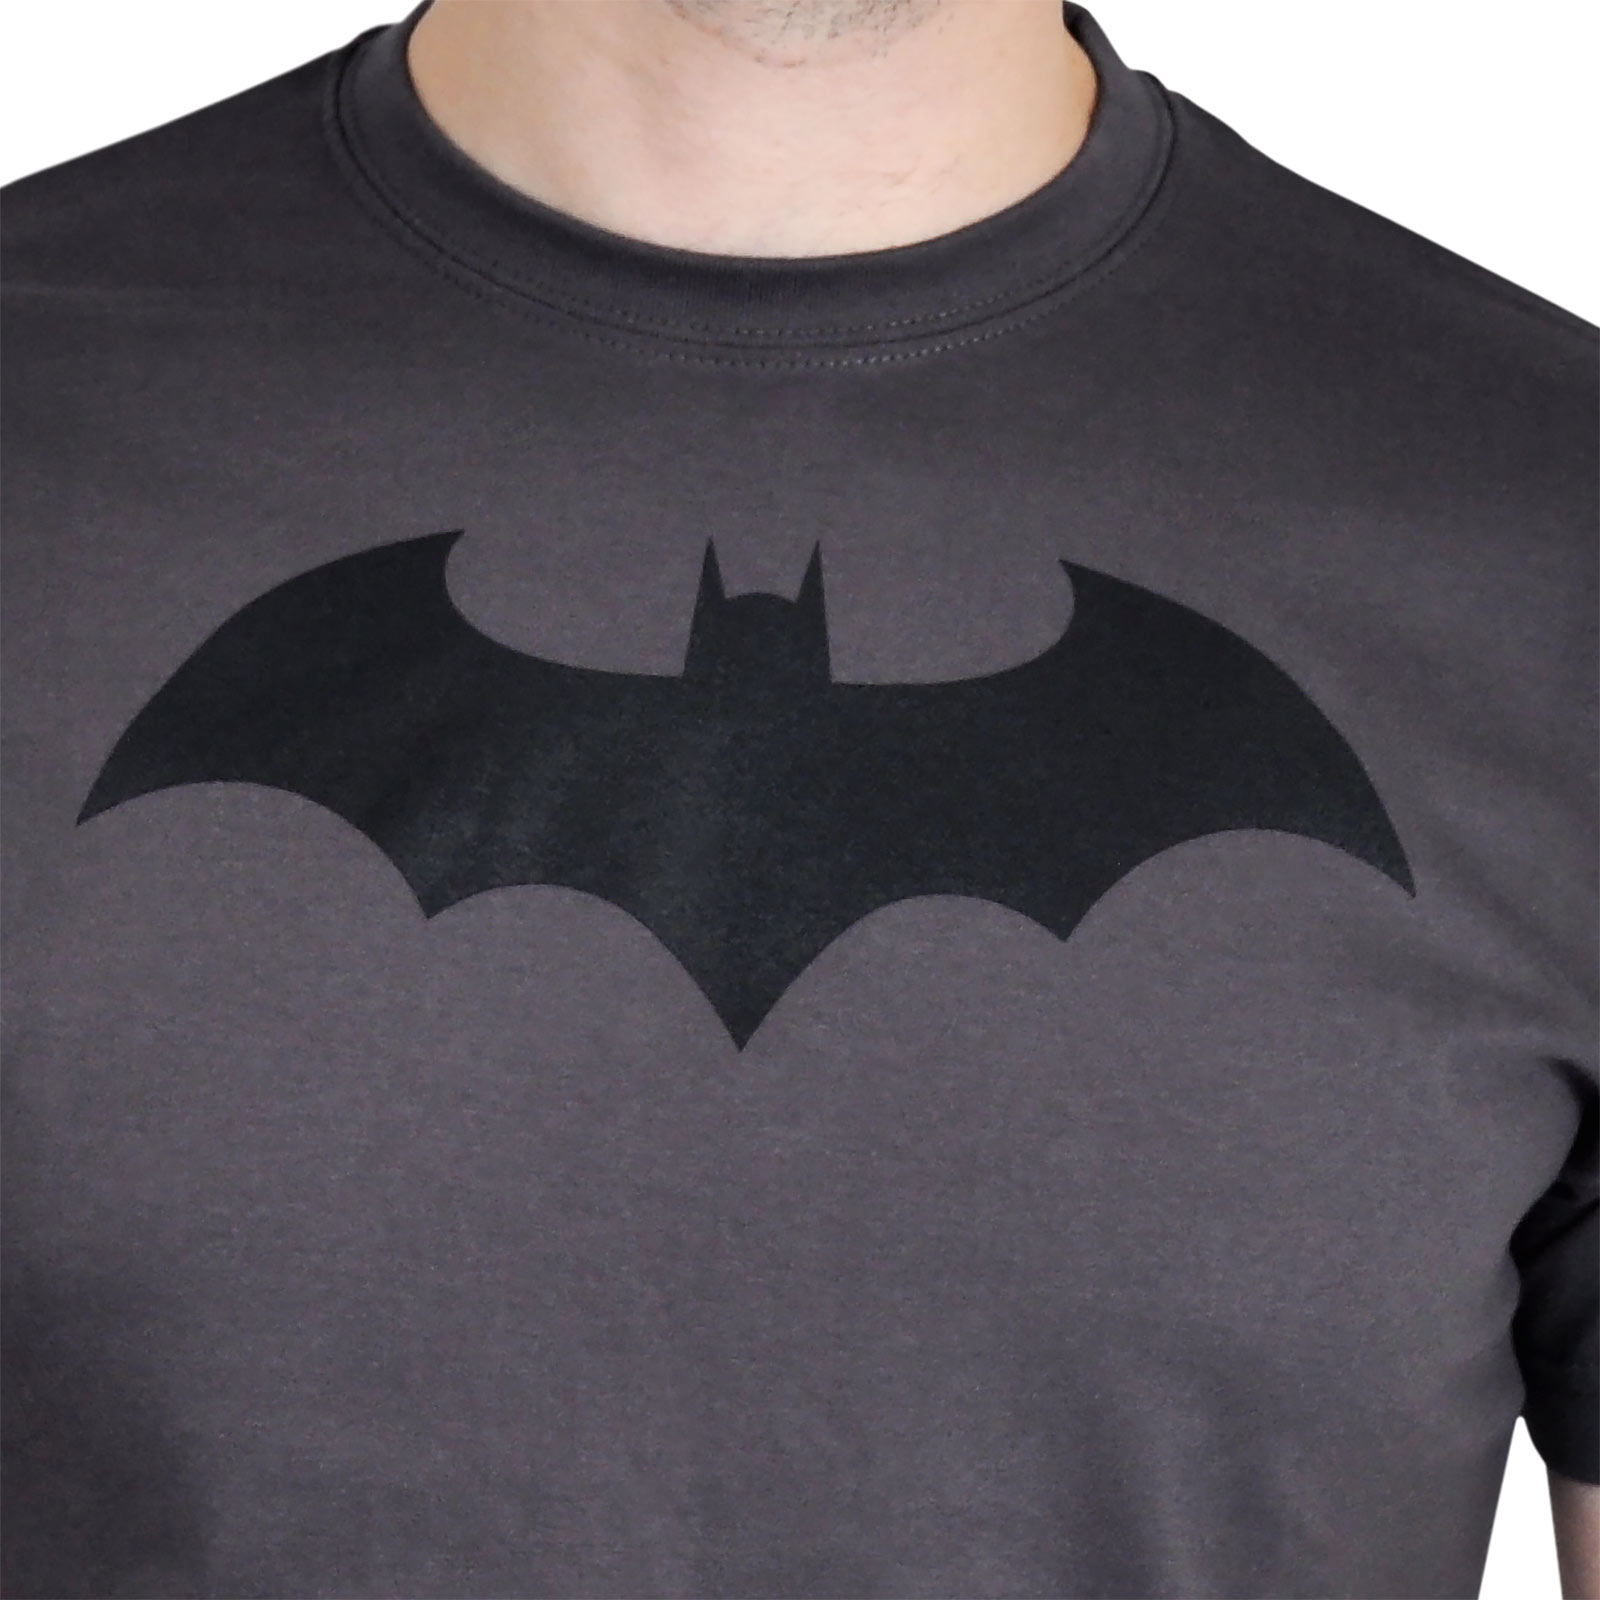 Batman - Bat Logo T-Shirt Grey